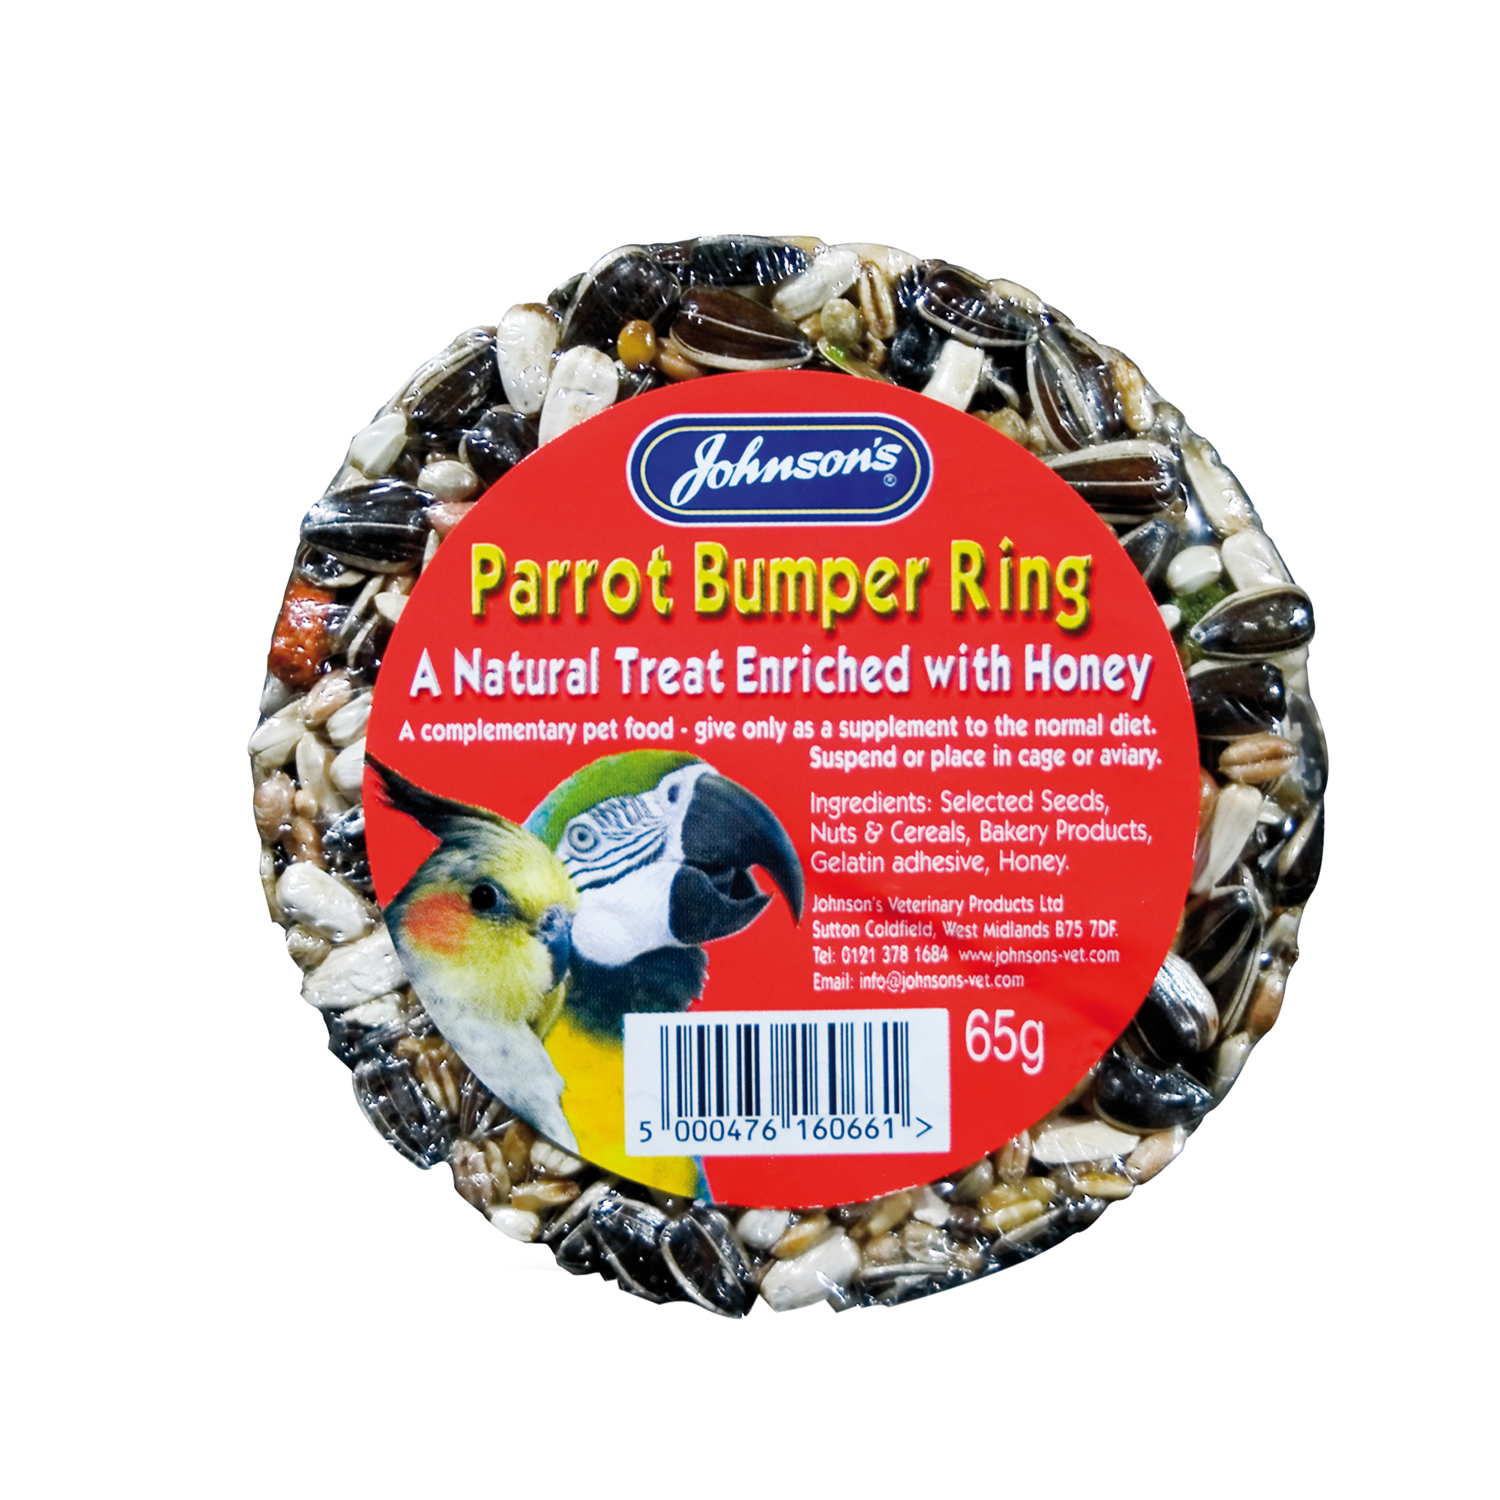 Parrot Bumper Ring Image